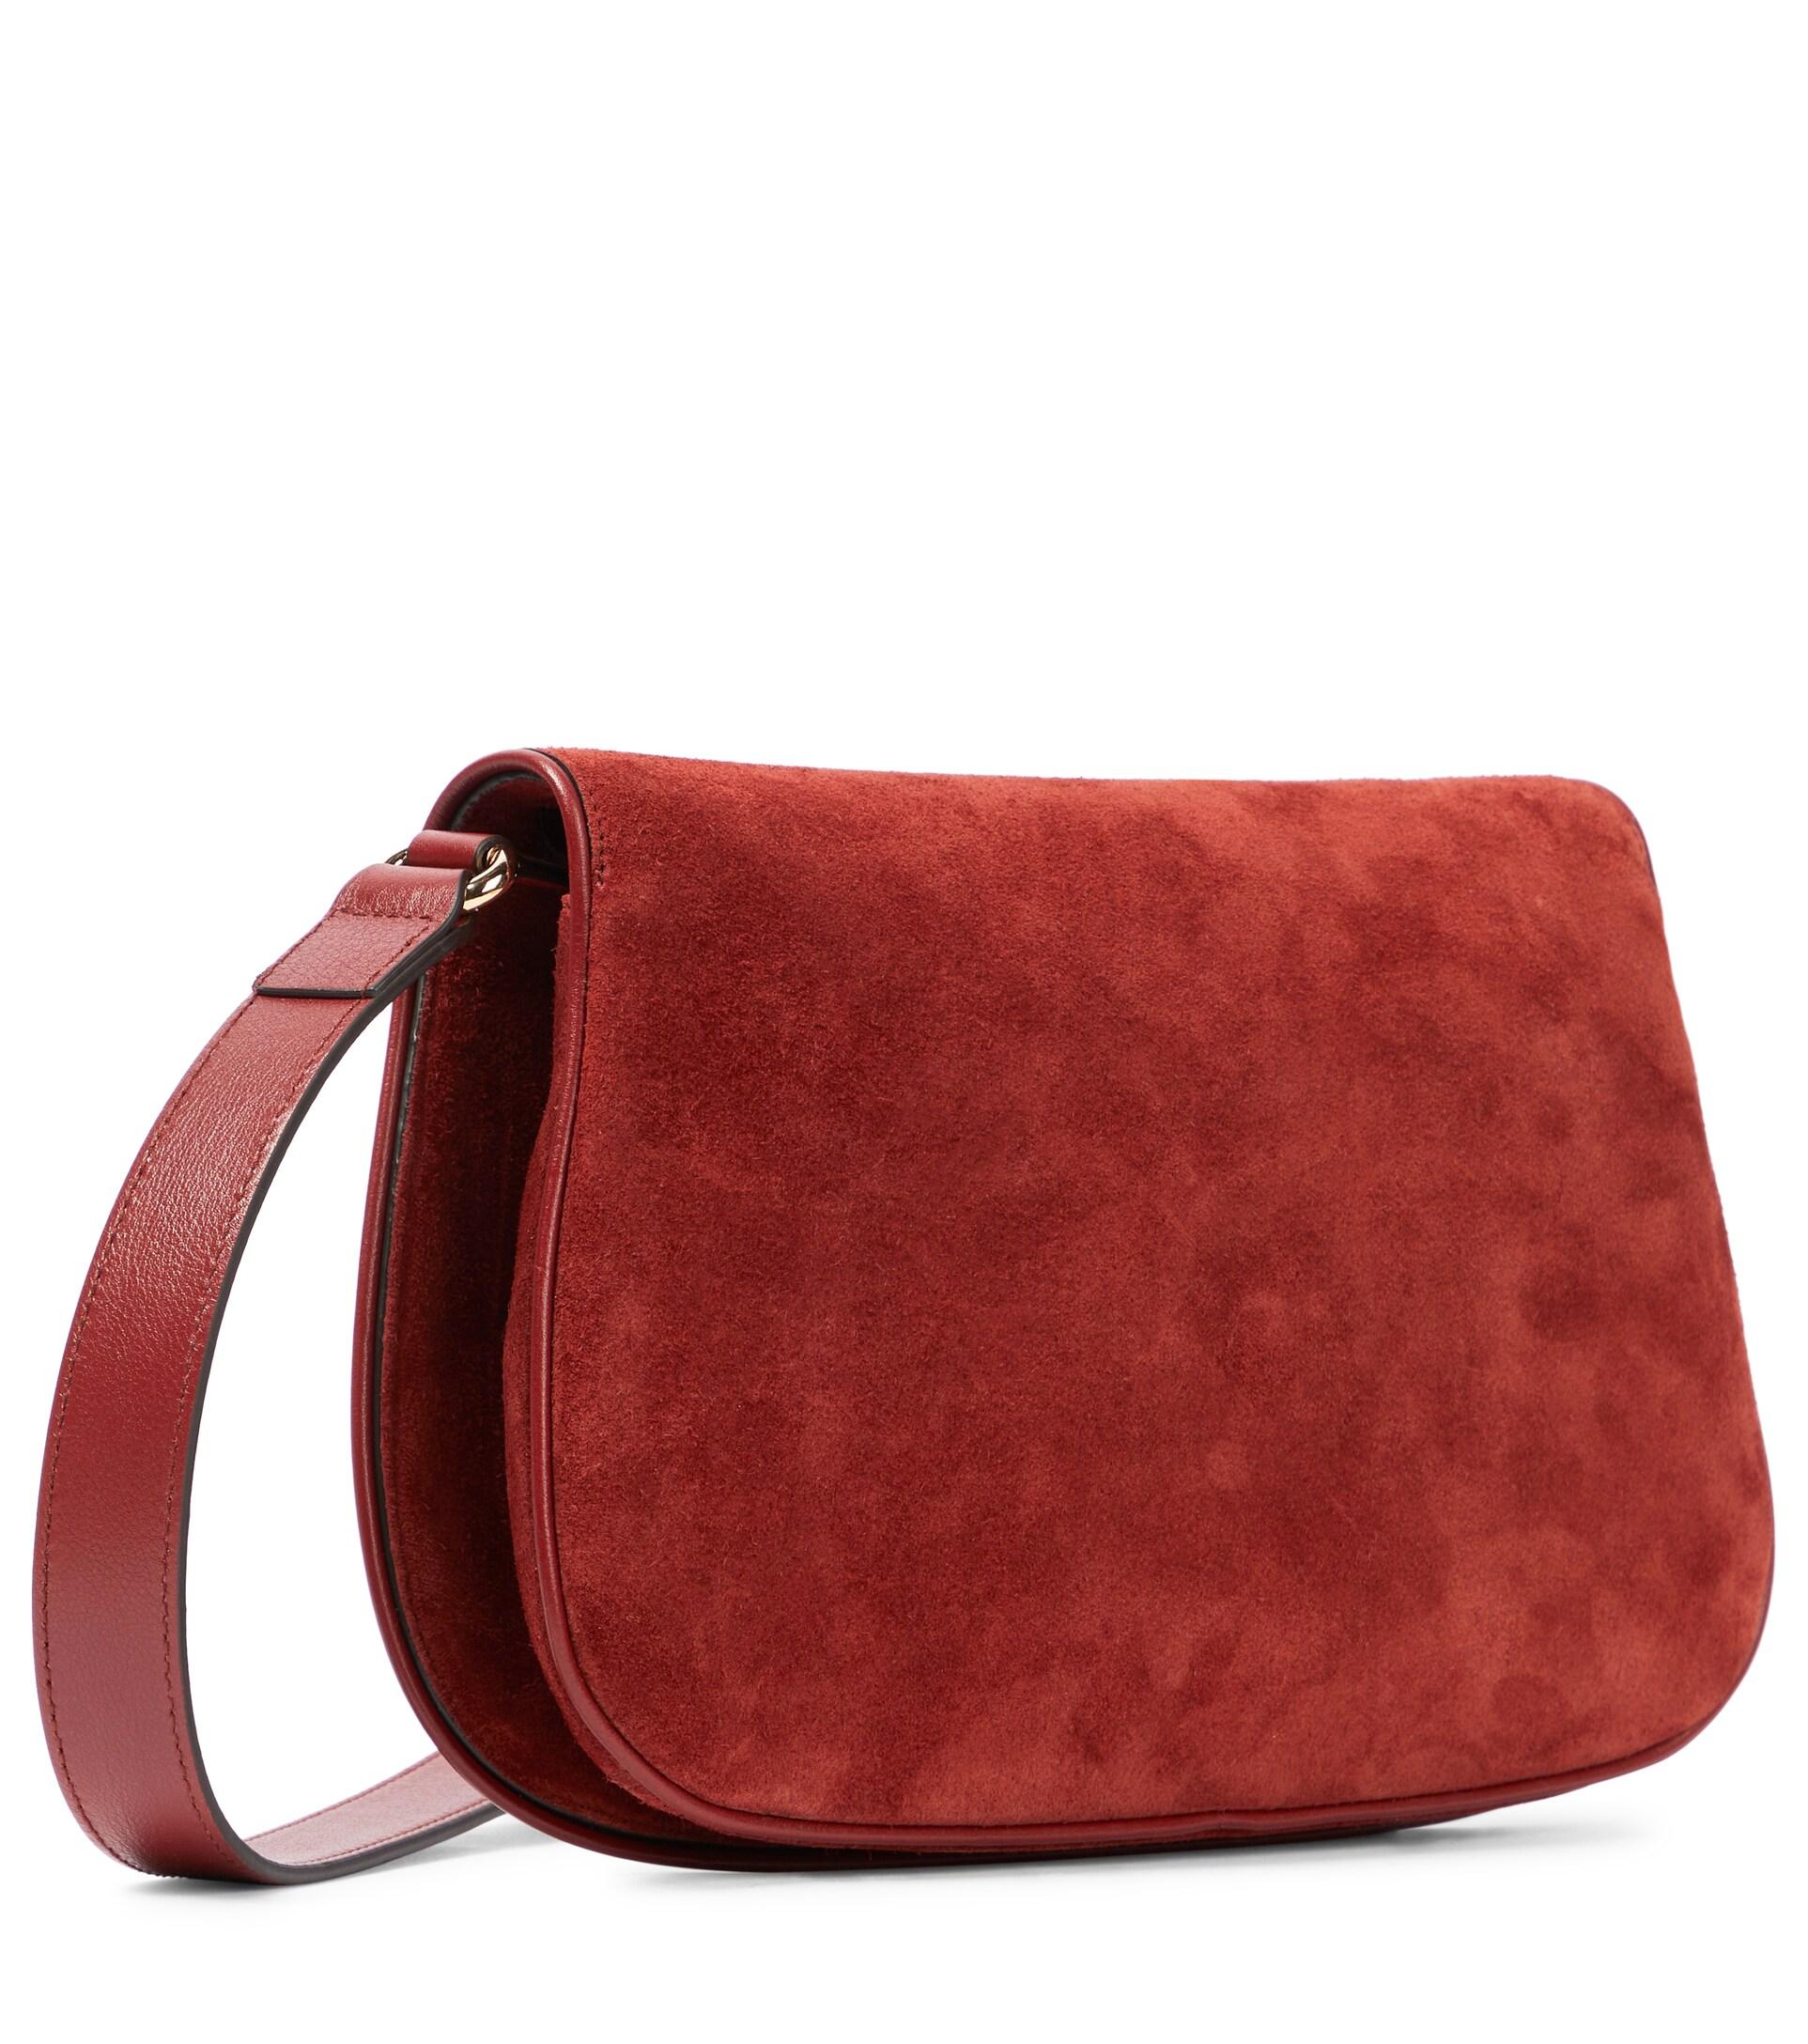 Gucci Blondie Suede Shoulder Bag in Red | Lyst